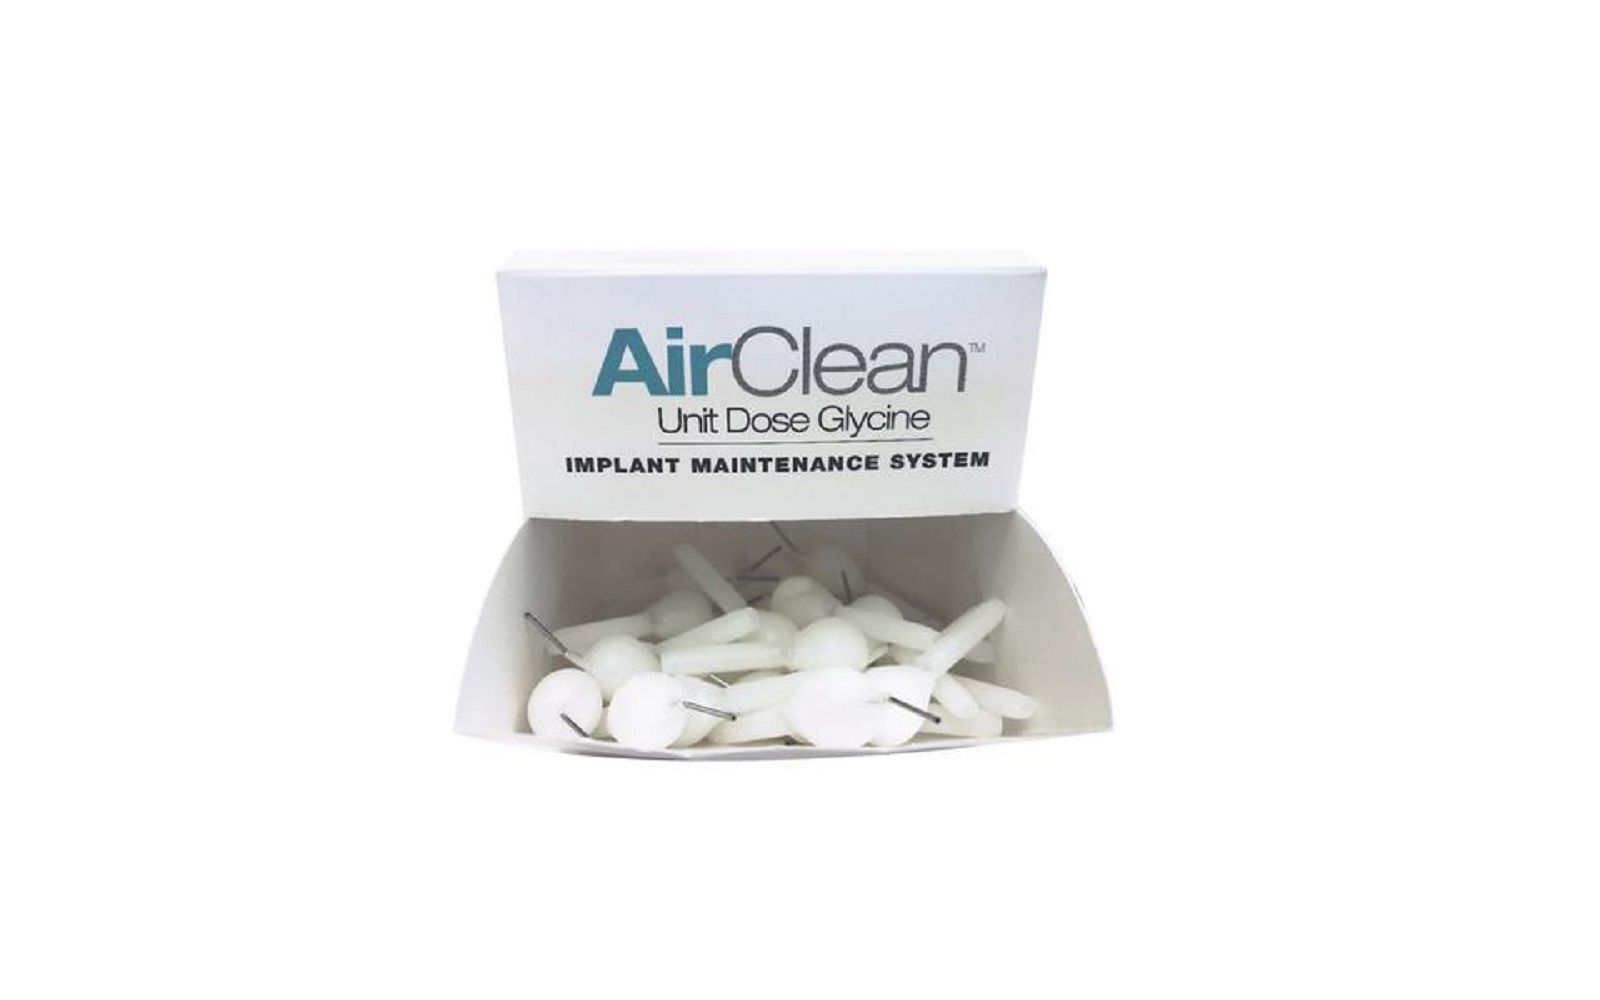 Airclean™ unit dose glycine implant maintenance system polishing powder refills, 30/pkg